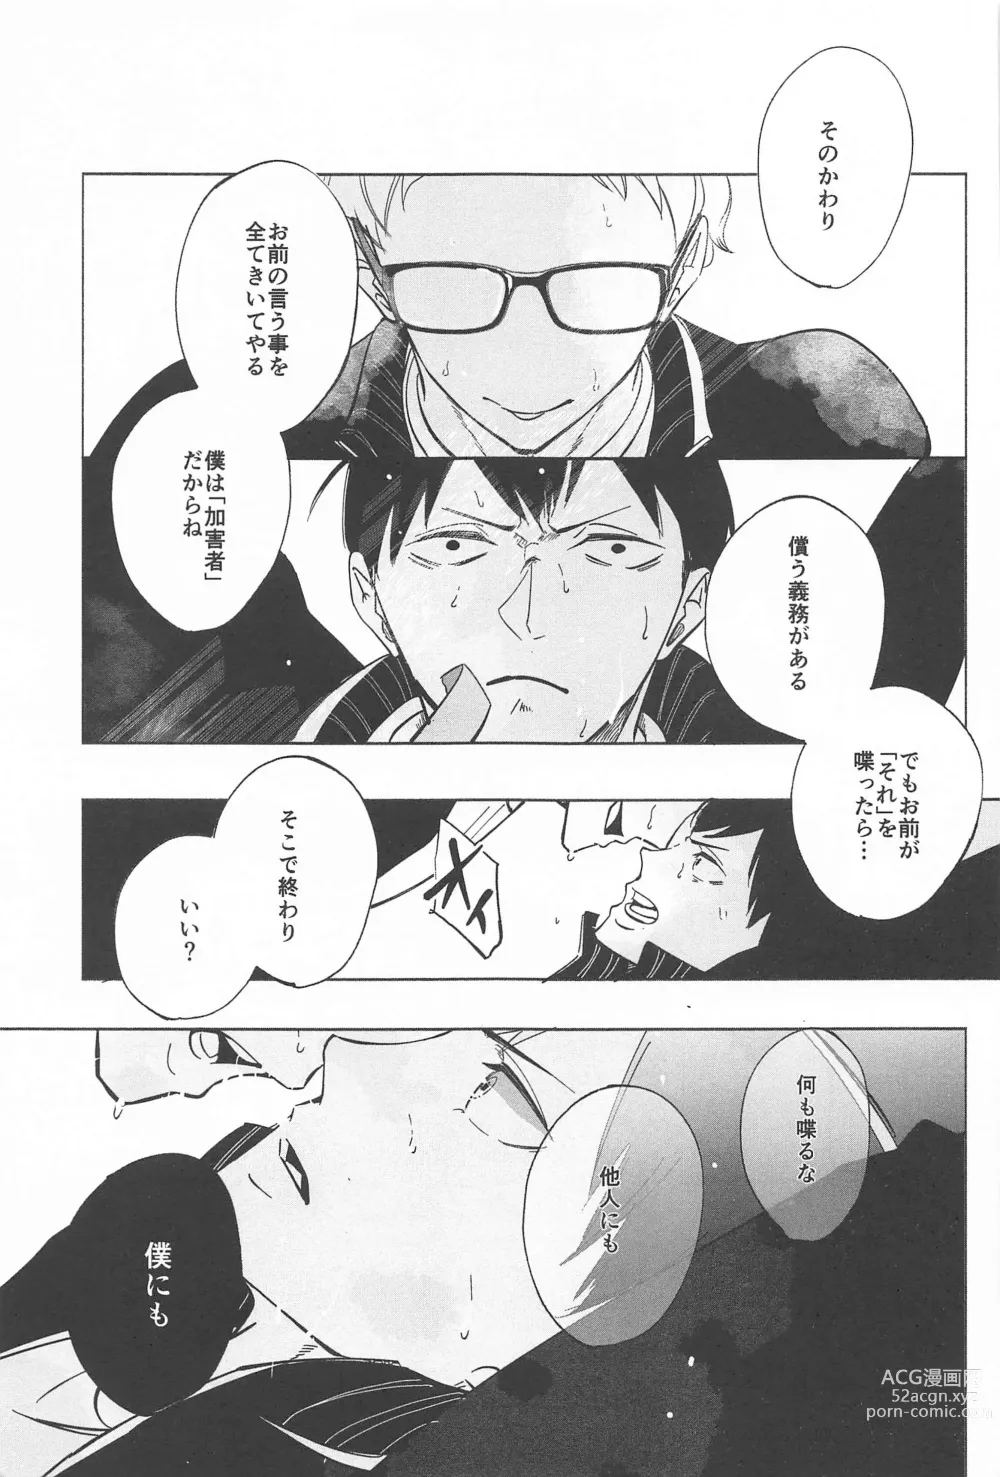 Page 7 of doujinshi Ketsui no Katachi